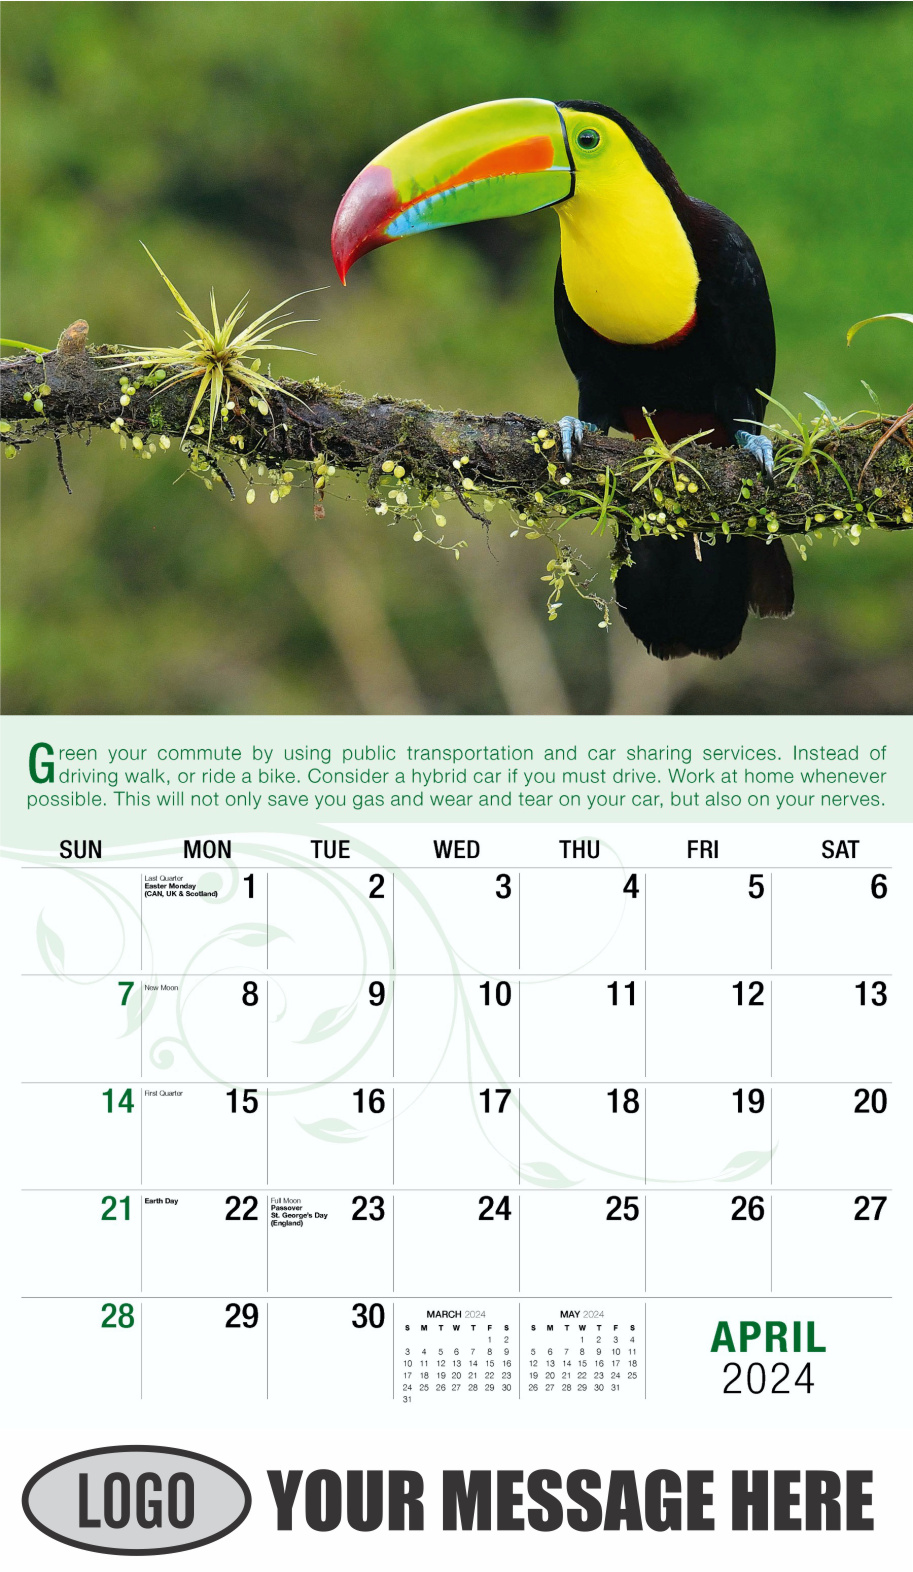 Go Green 2024 Business Promotion Calendar - April